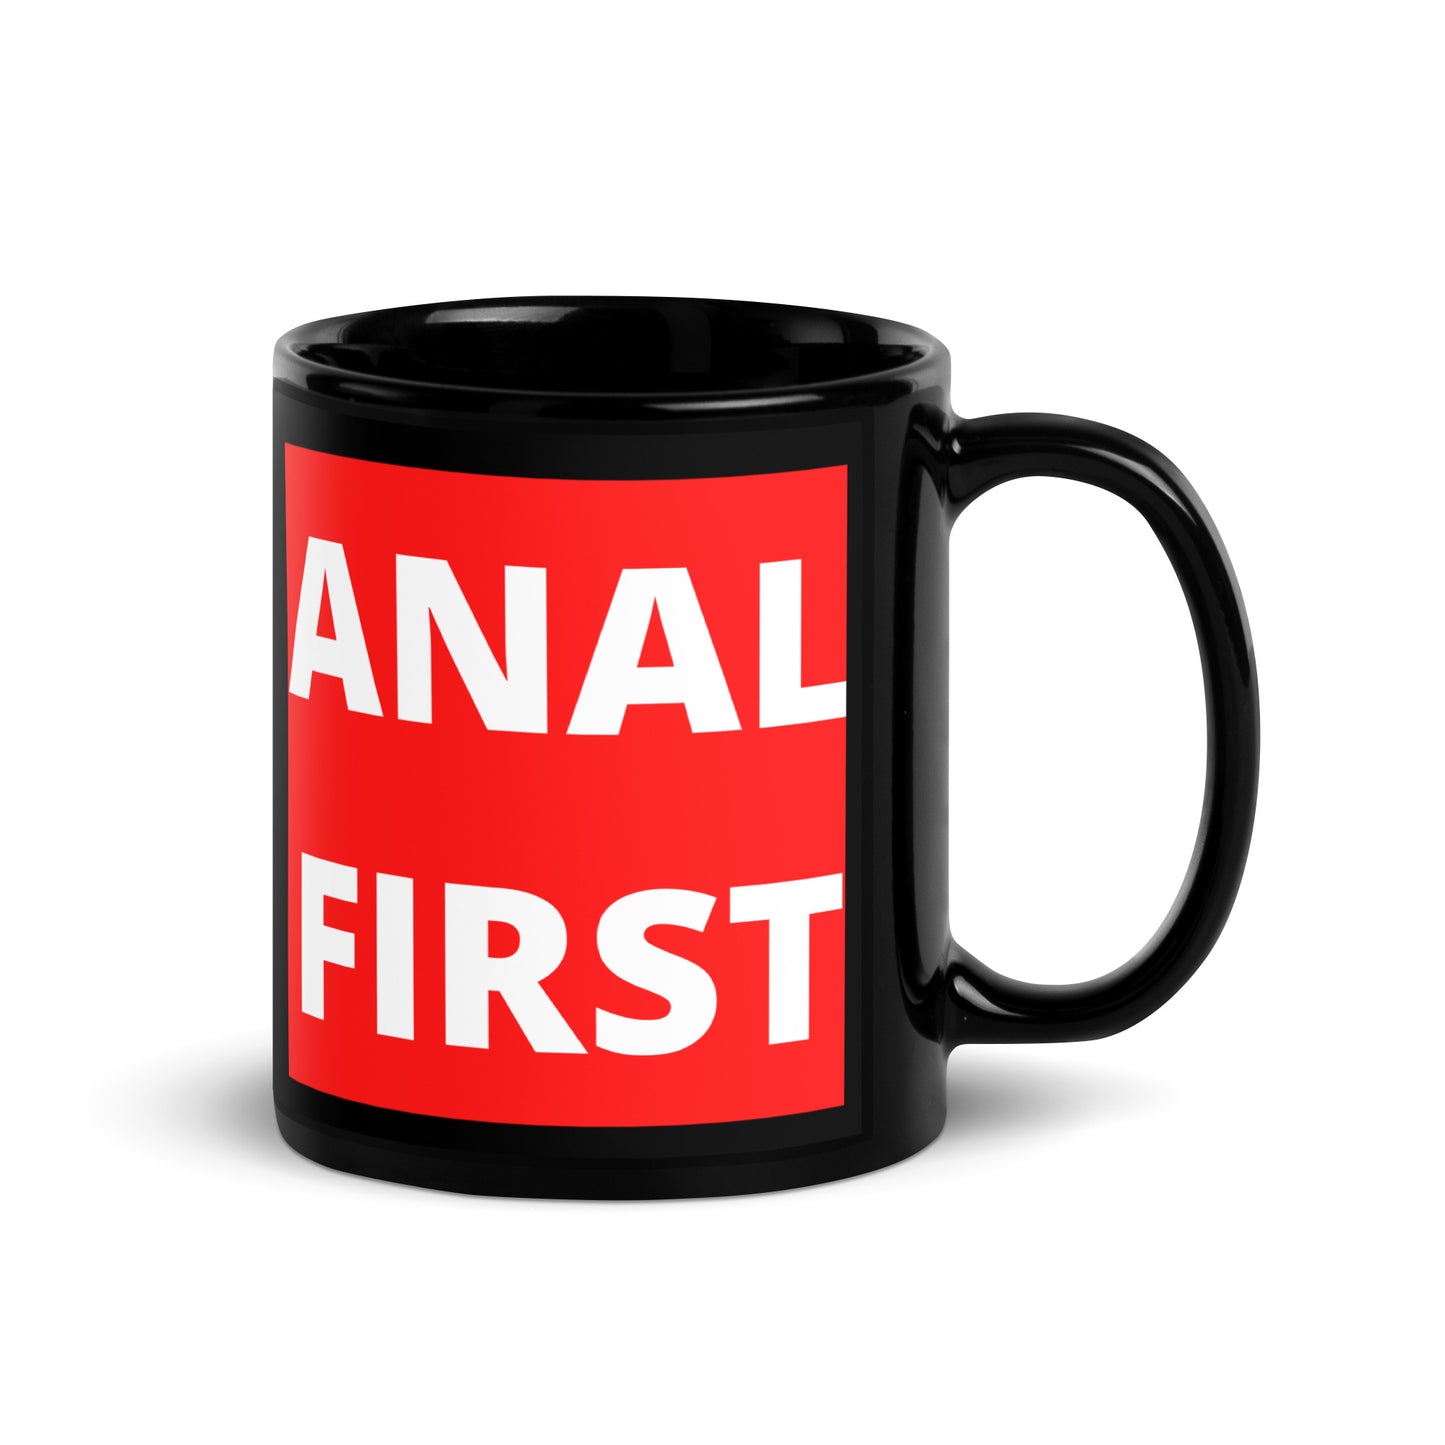 Anal First Mug